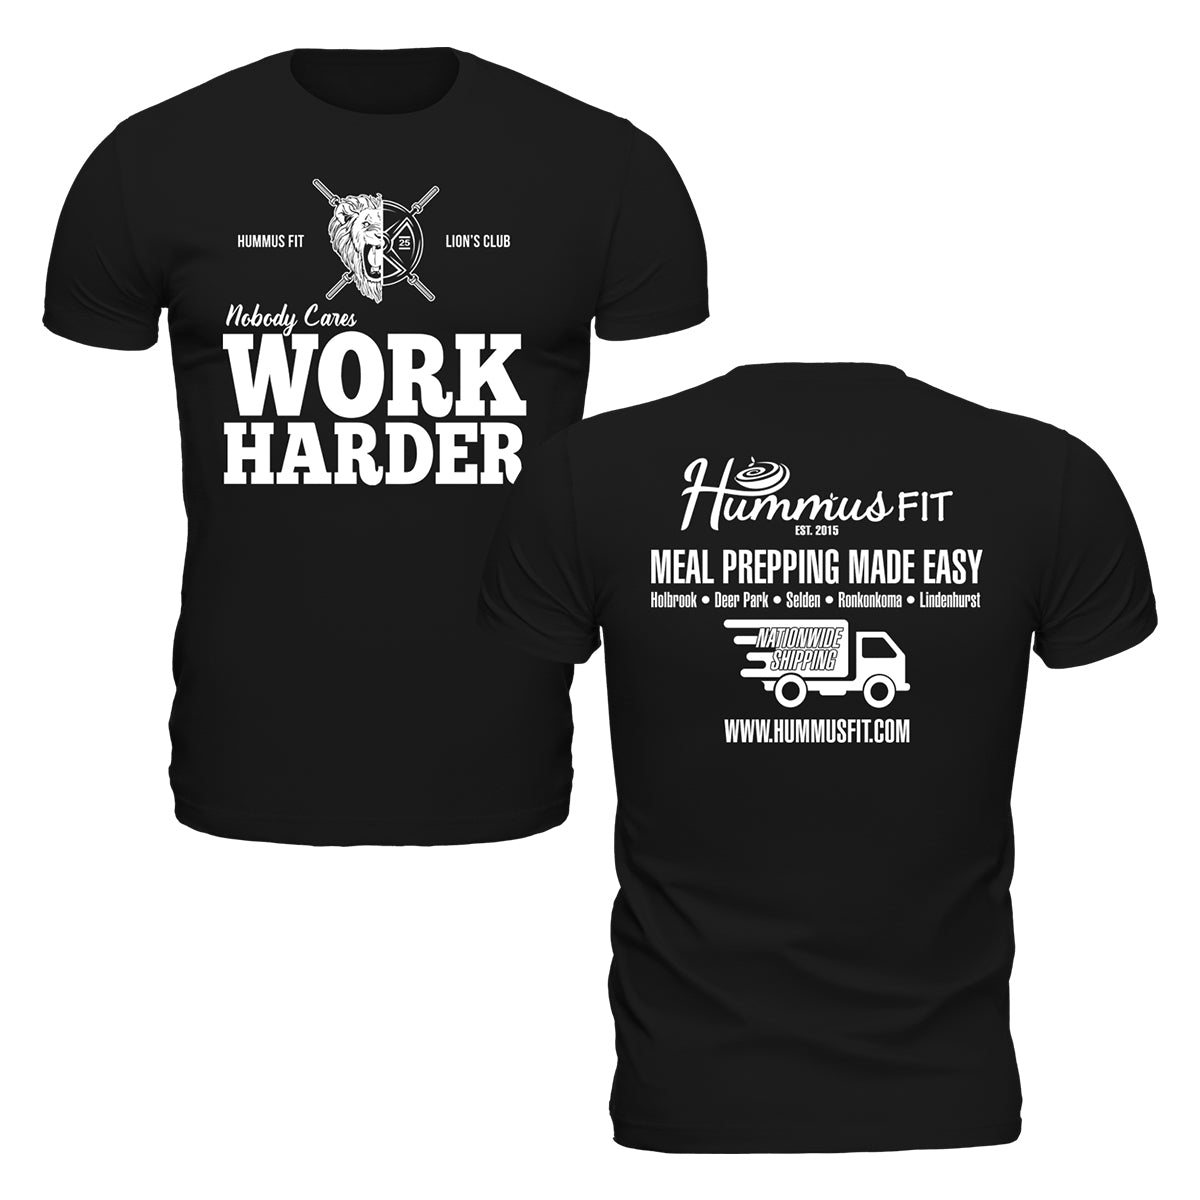 A nadie le importa trabajar más duro - Camiseta unisex Softstyle (negro)